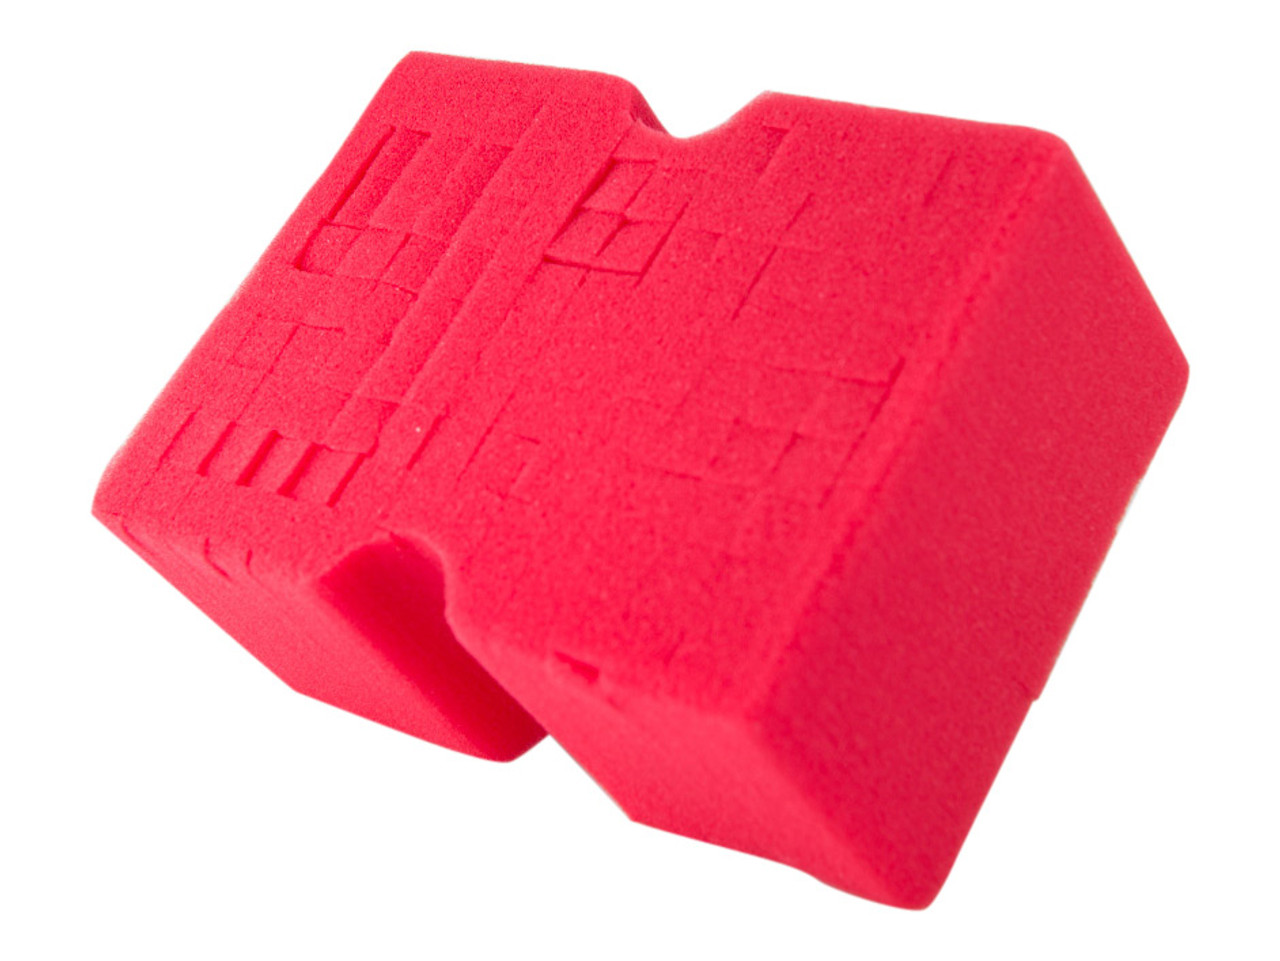 Optimum No-Rinse Wash & Shine with Big Red Sponge